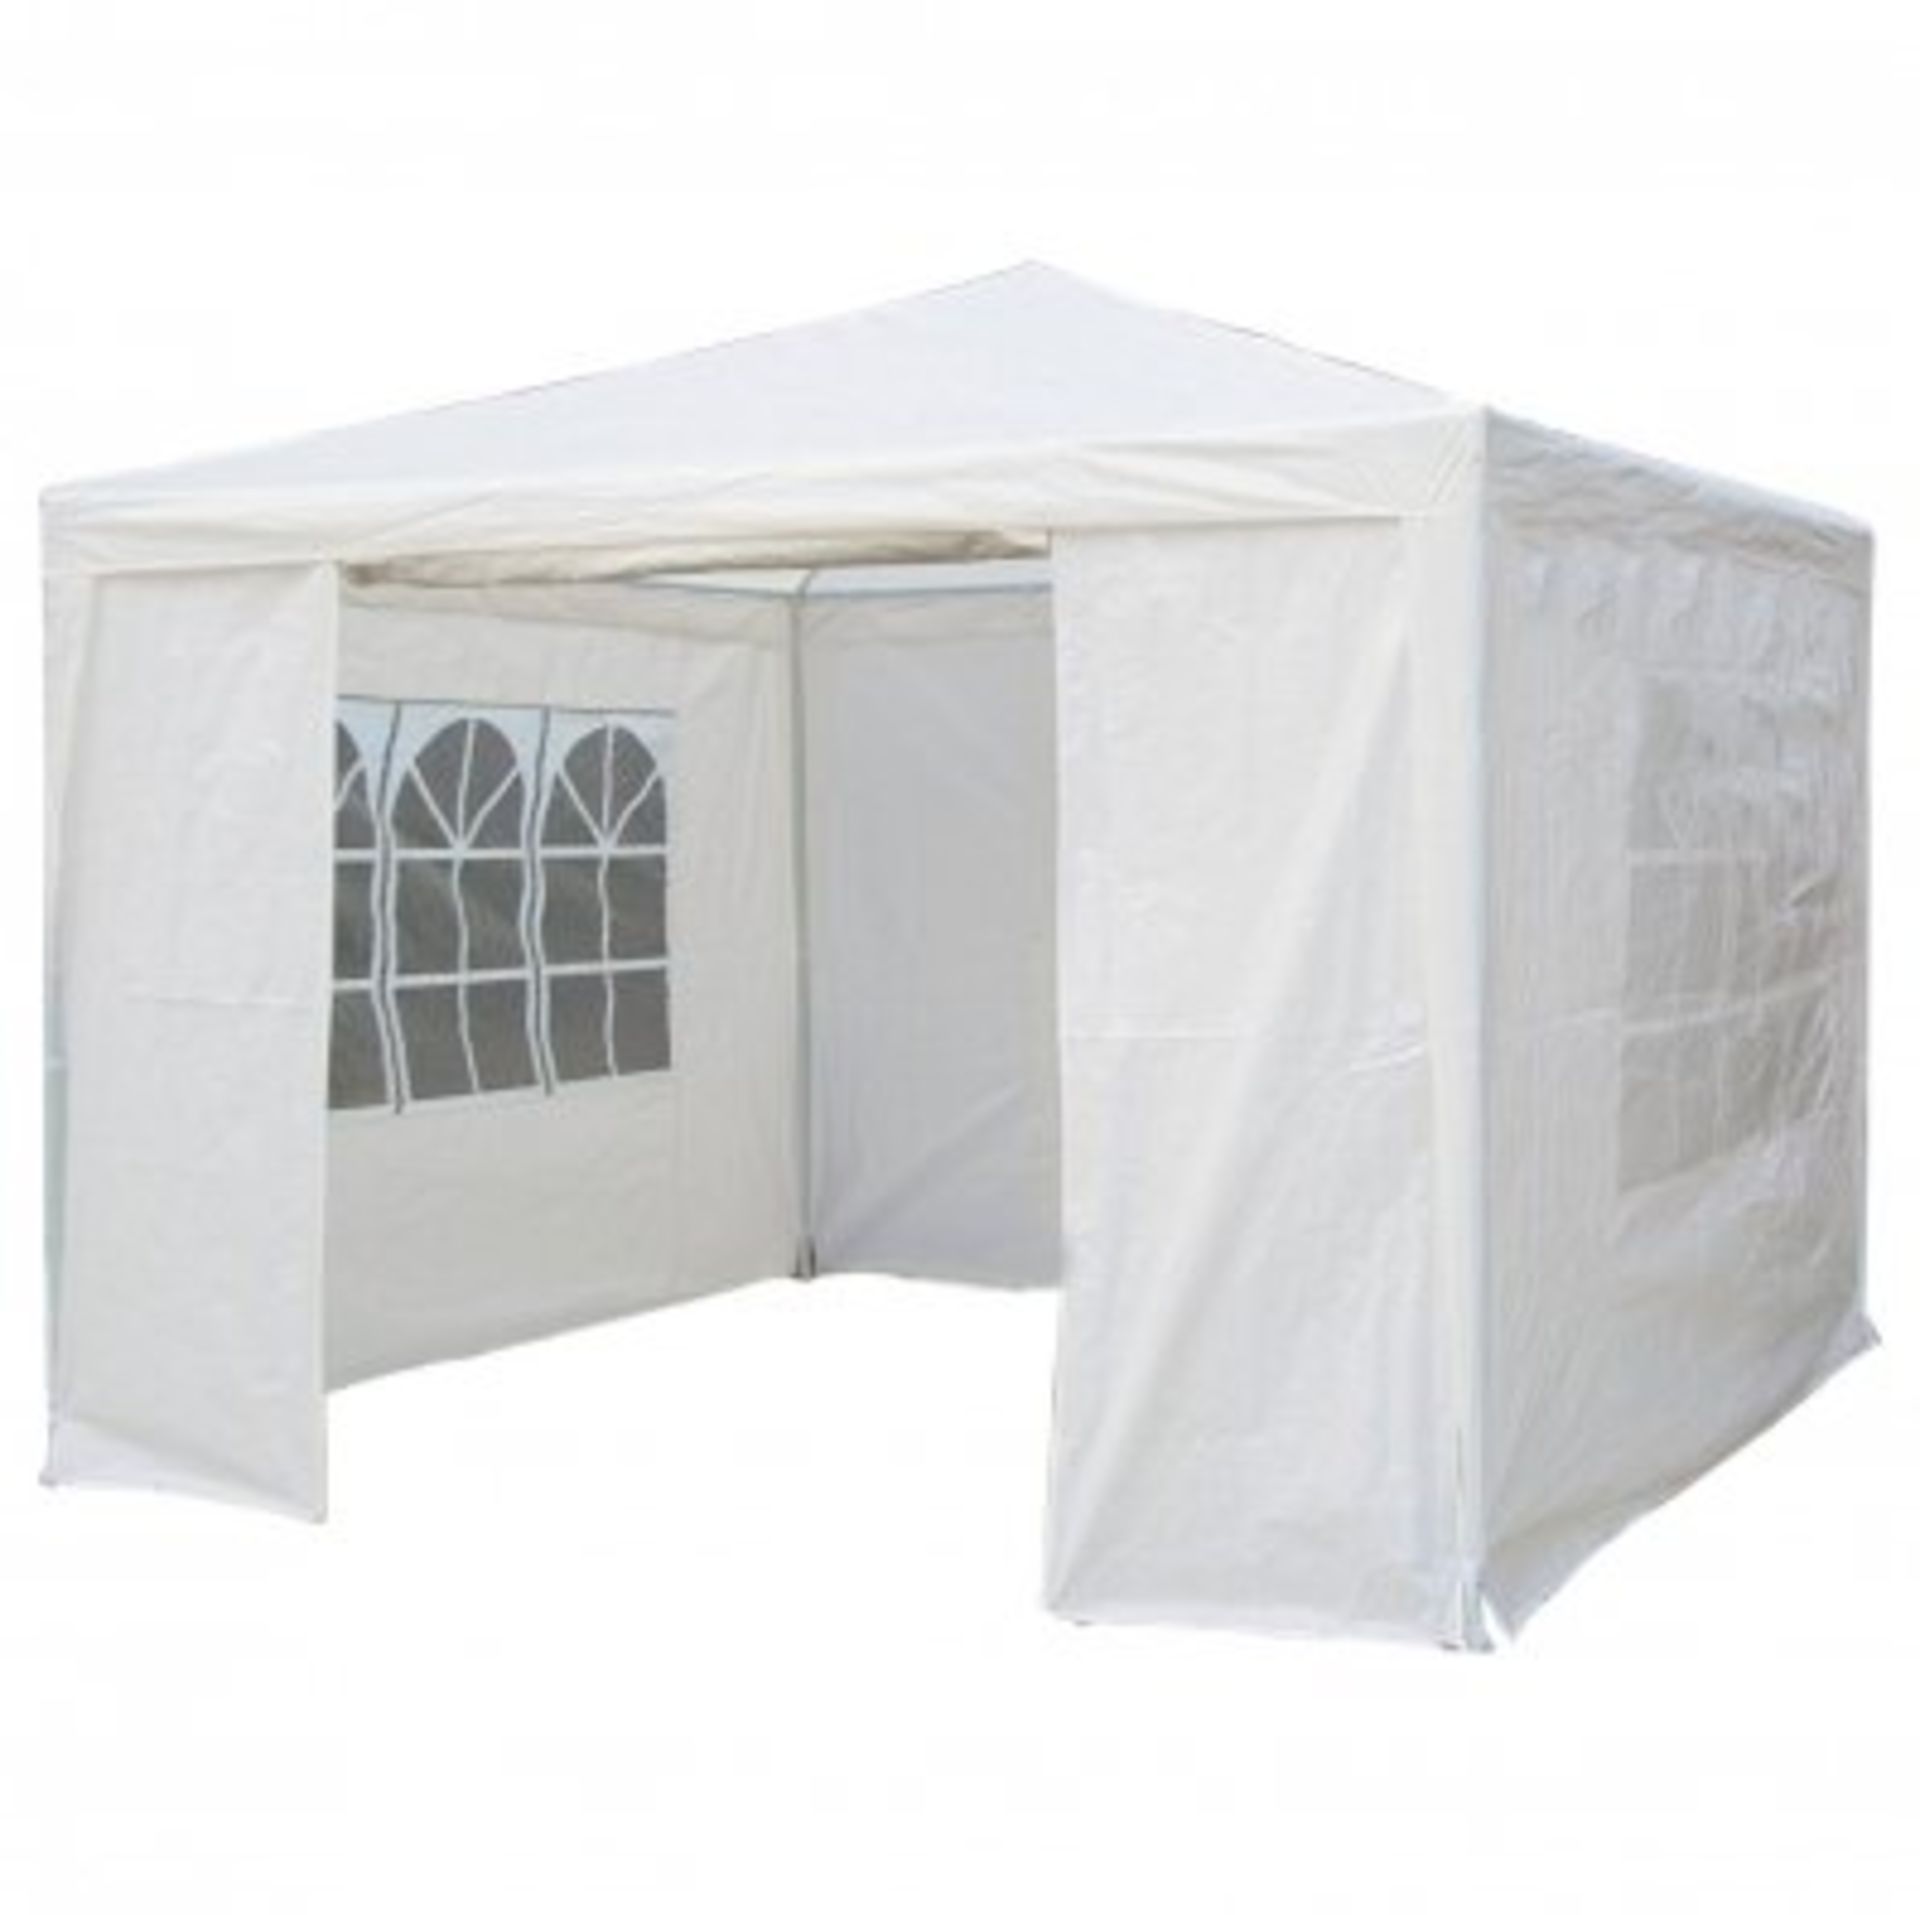 (RU294) 3m x 3m White Waterproof Garden Gazebo Marquee Awning Tent The 3m gazebo is ideal ...